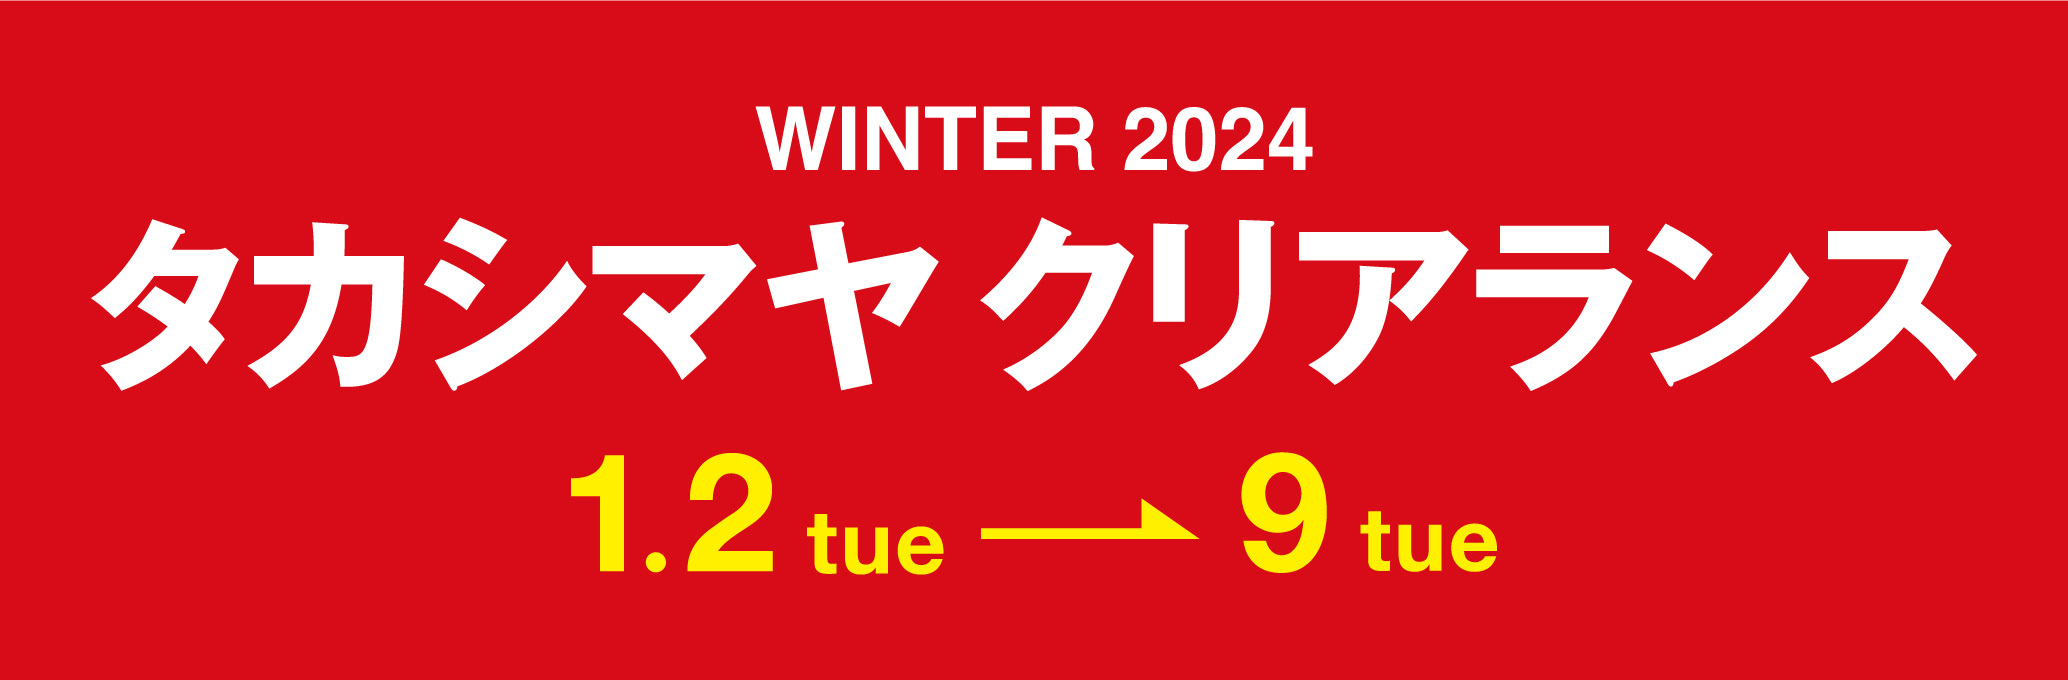 SUMMER 2022 タカシマヤクリアランス